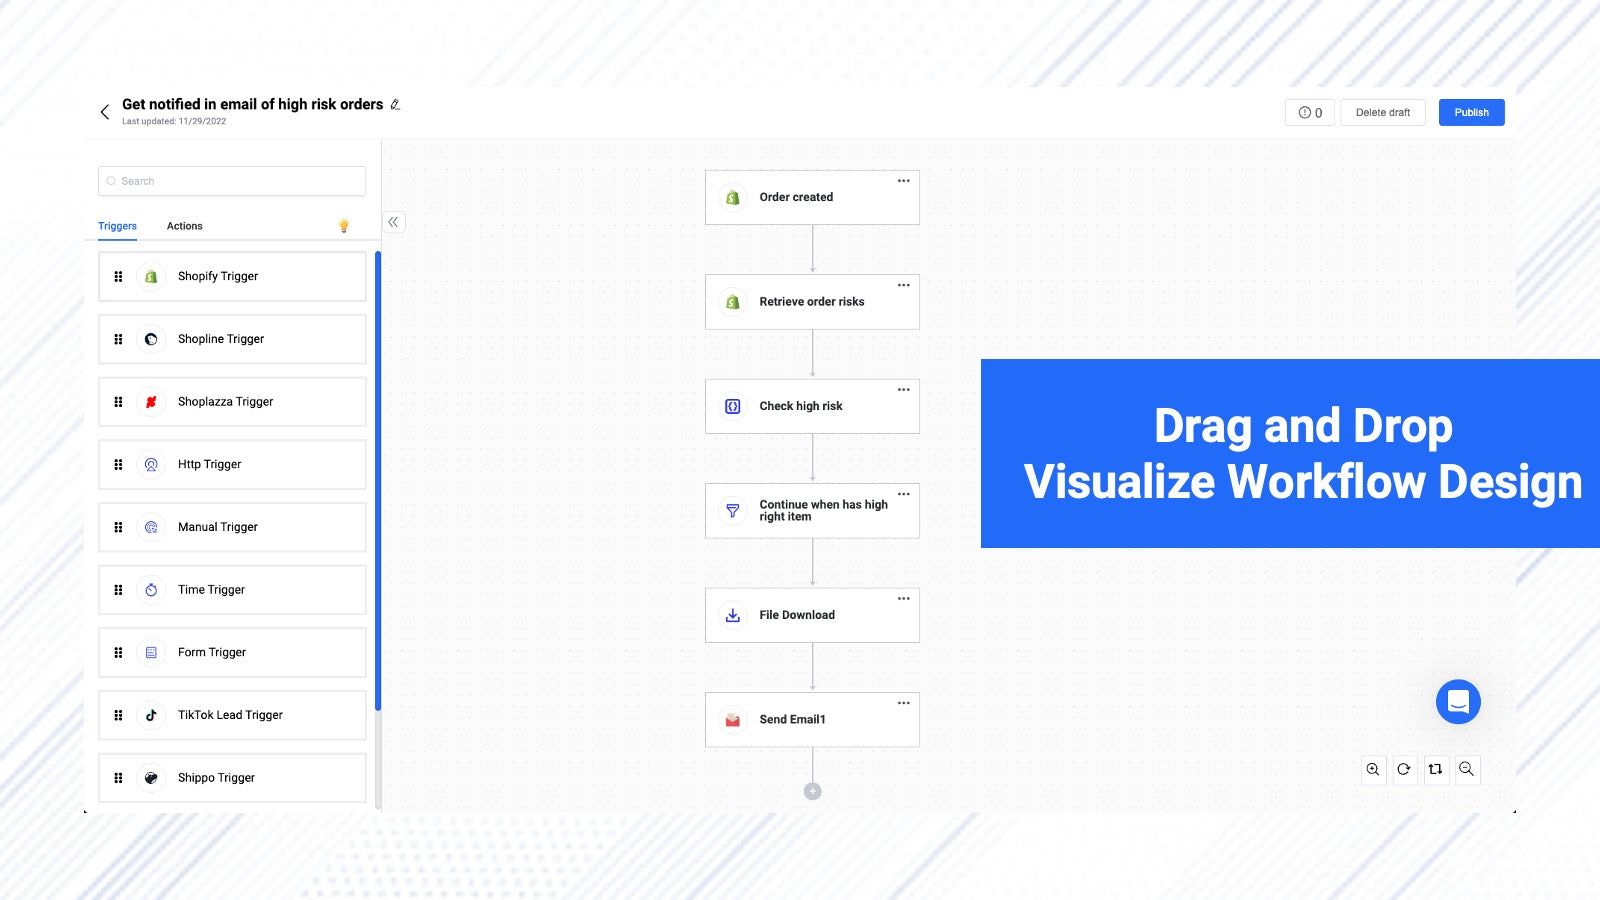 Drag & Drop visualize workflow design